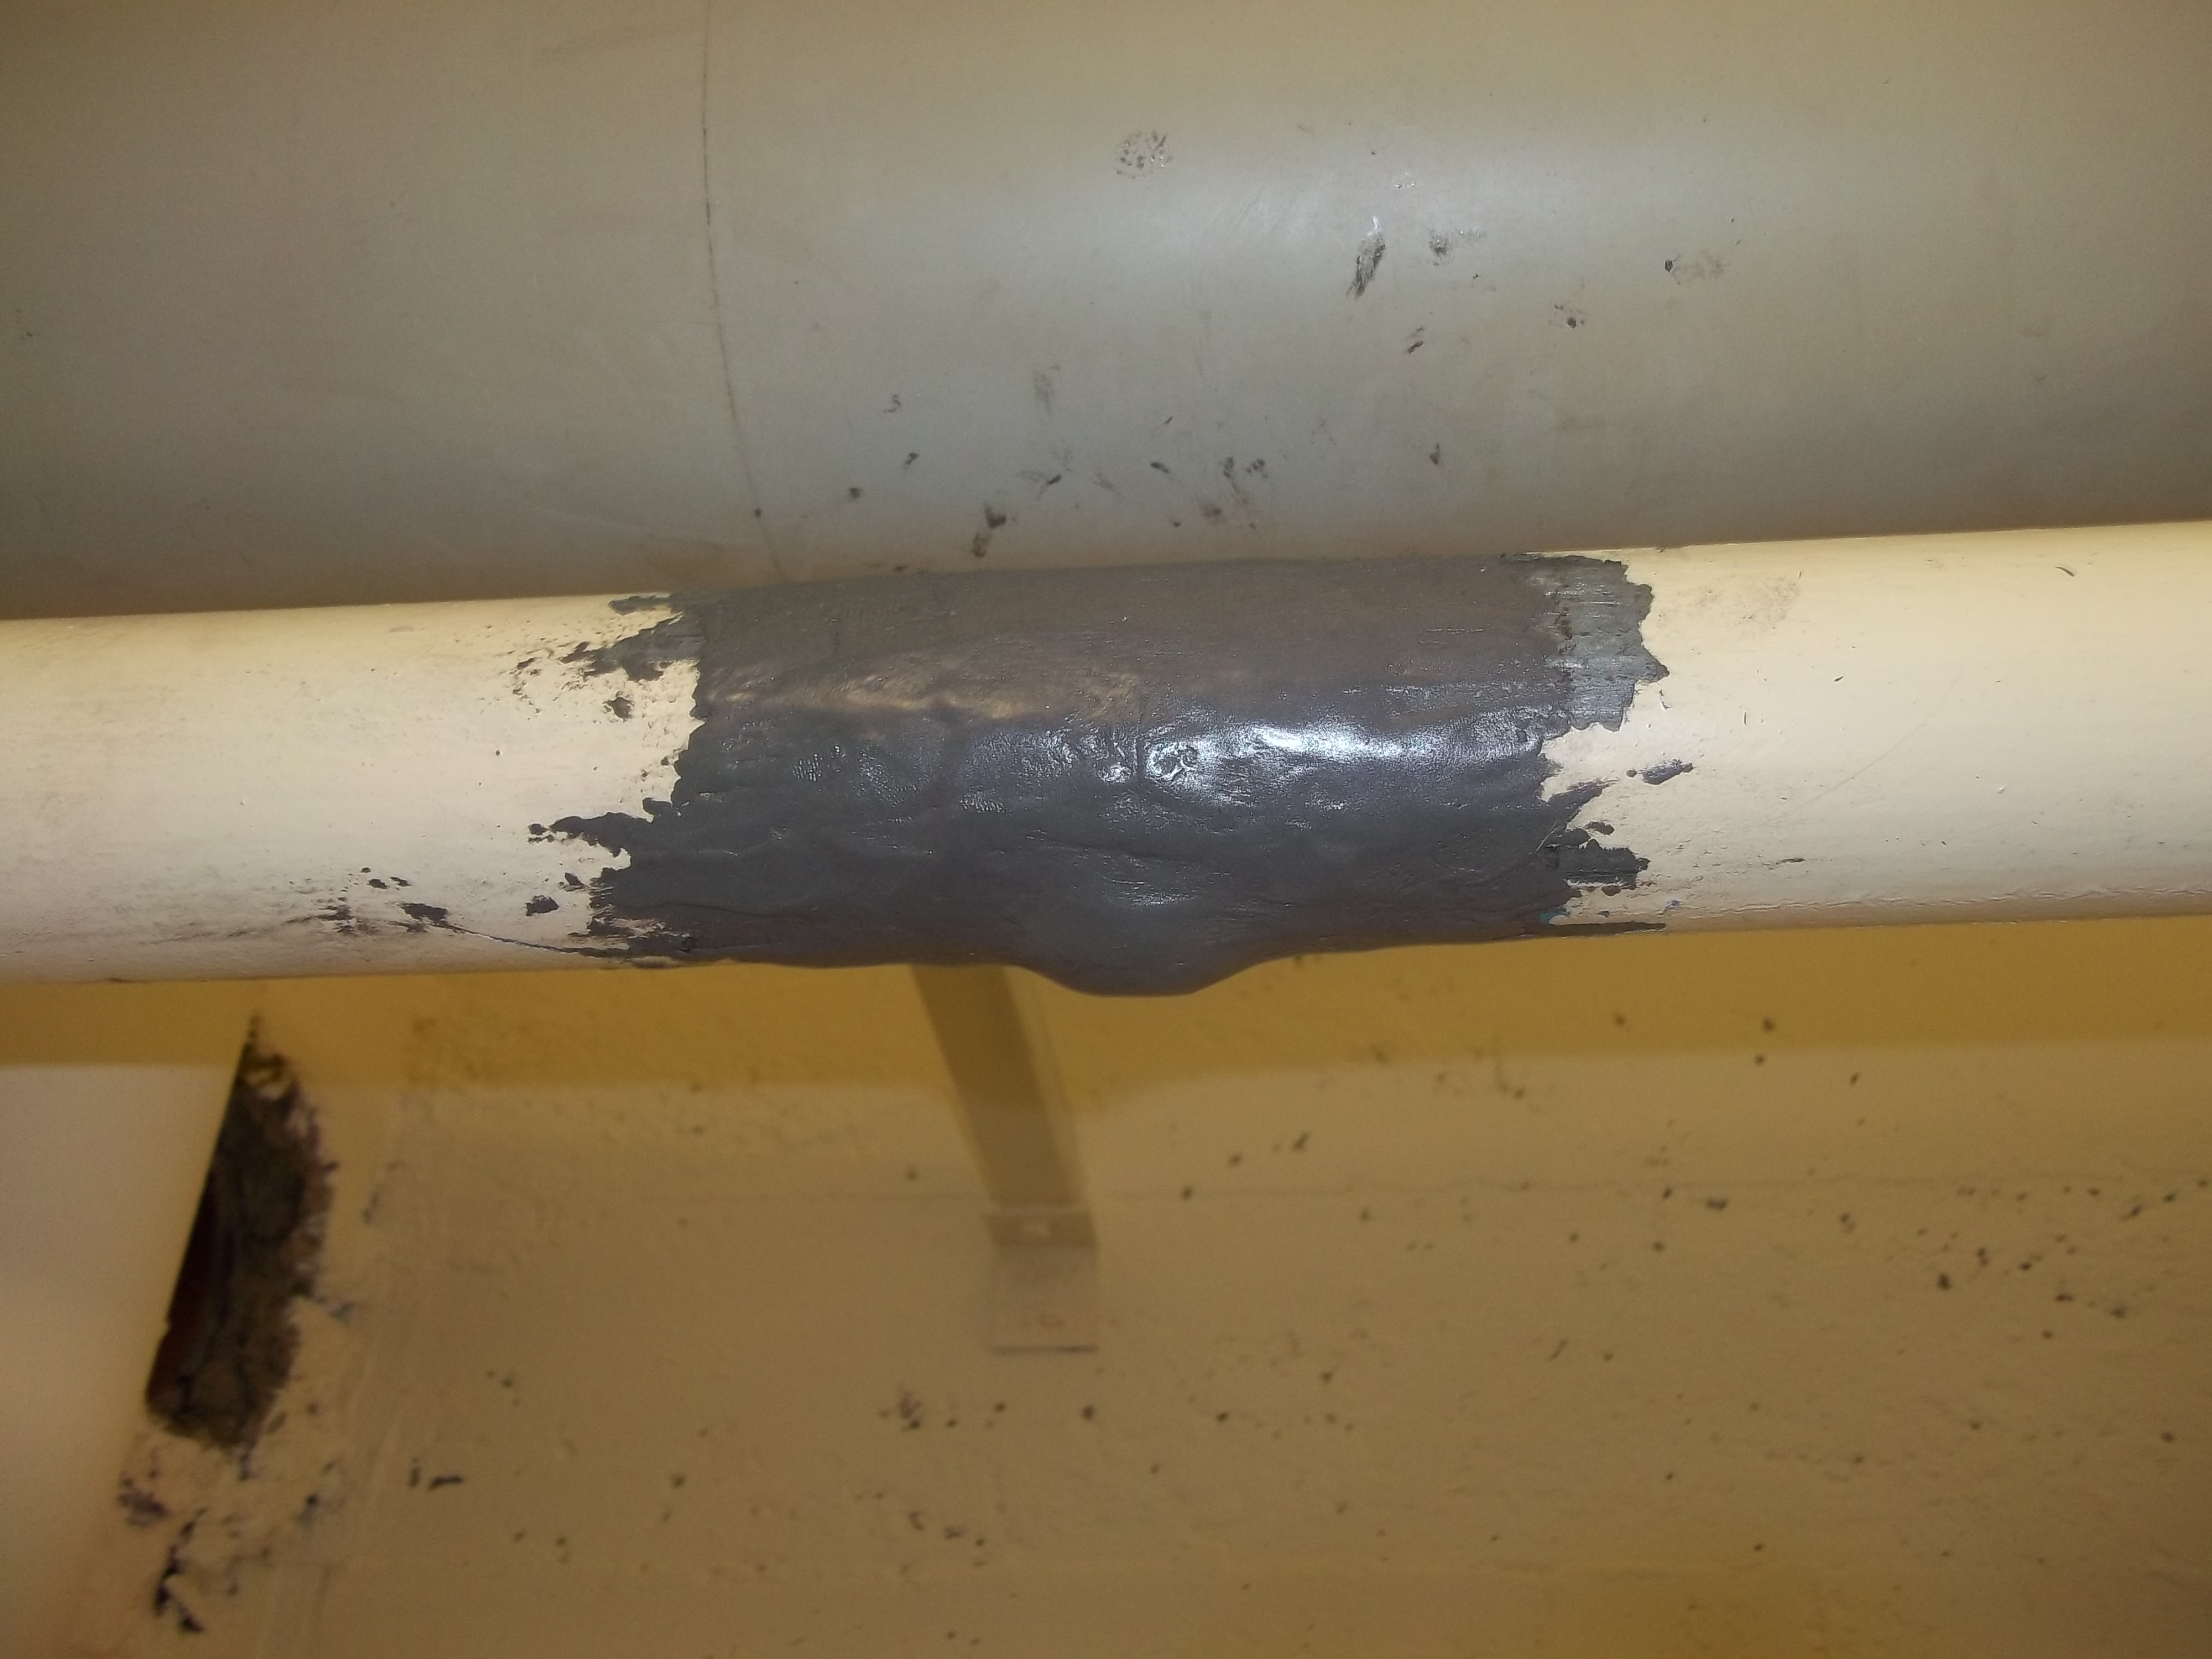 Emergency pipe repair at a school - airport facilities maintenance